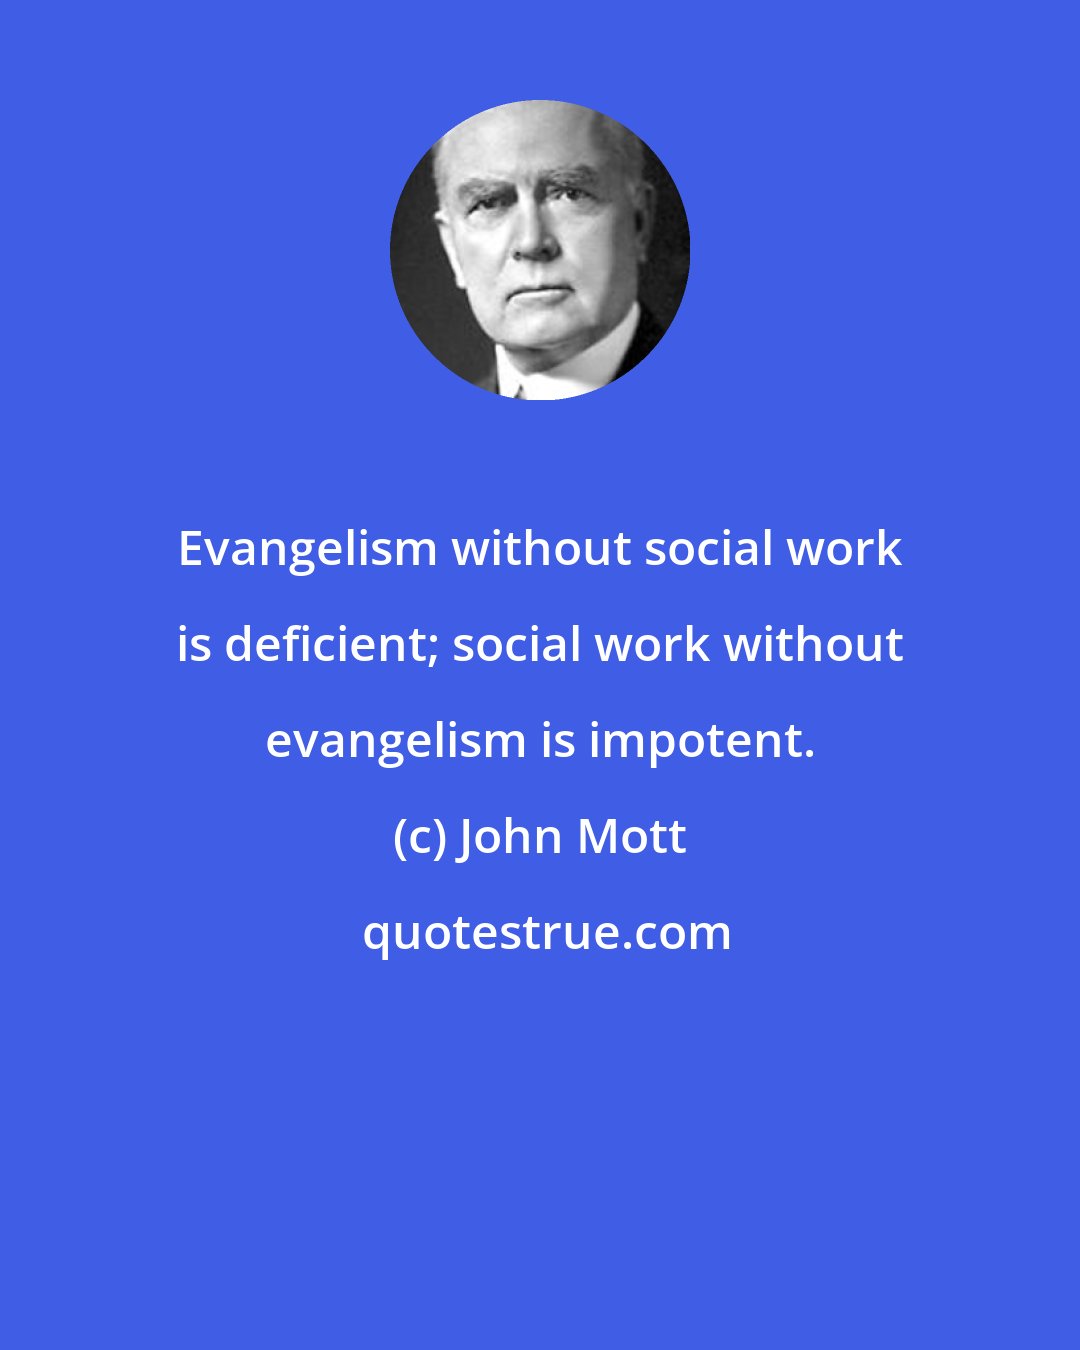 John Mott: Evangelism without social work is deficient; social work without evangelism is impotent.